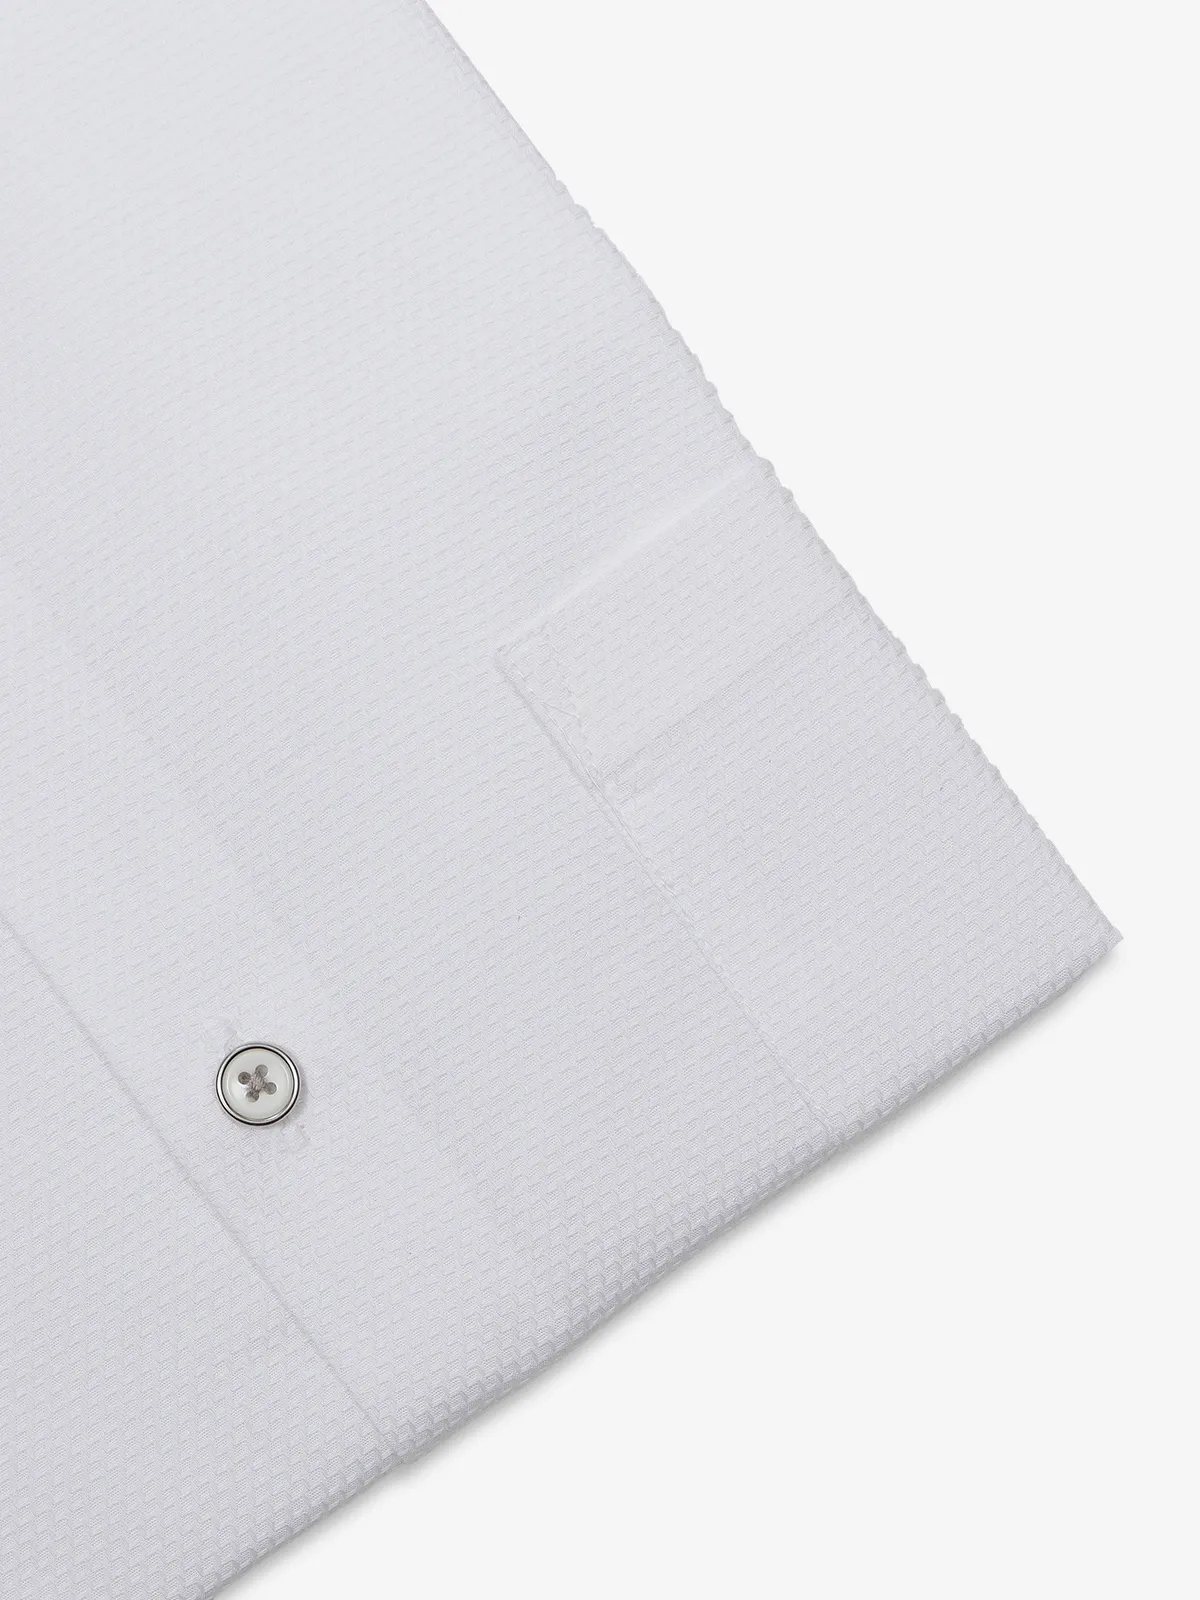 GINNETI plain white texture shirt